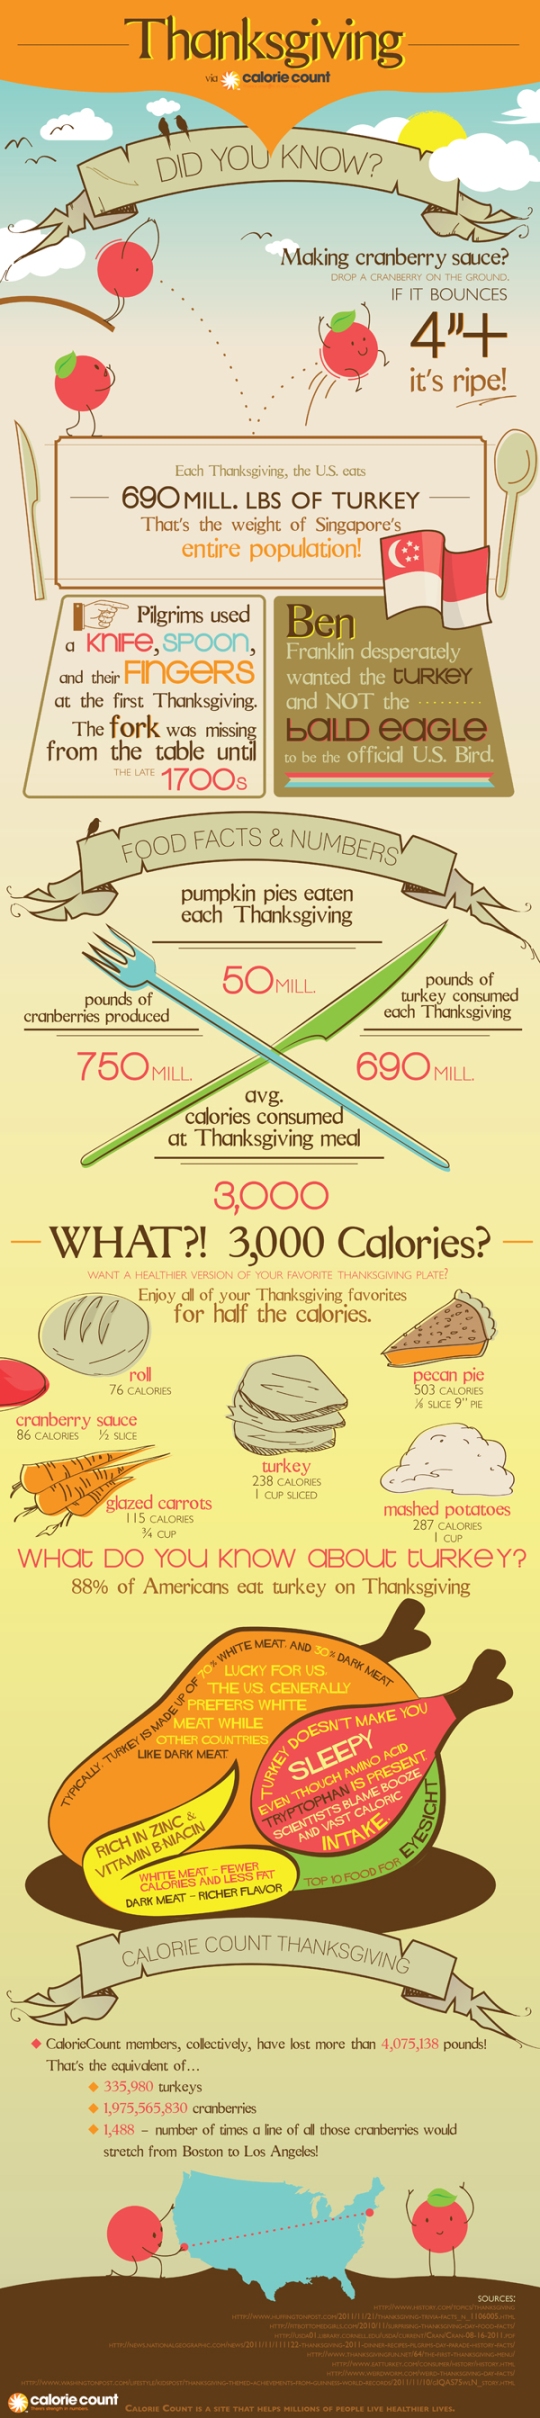 thanksgiving calories